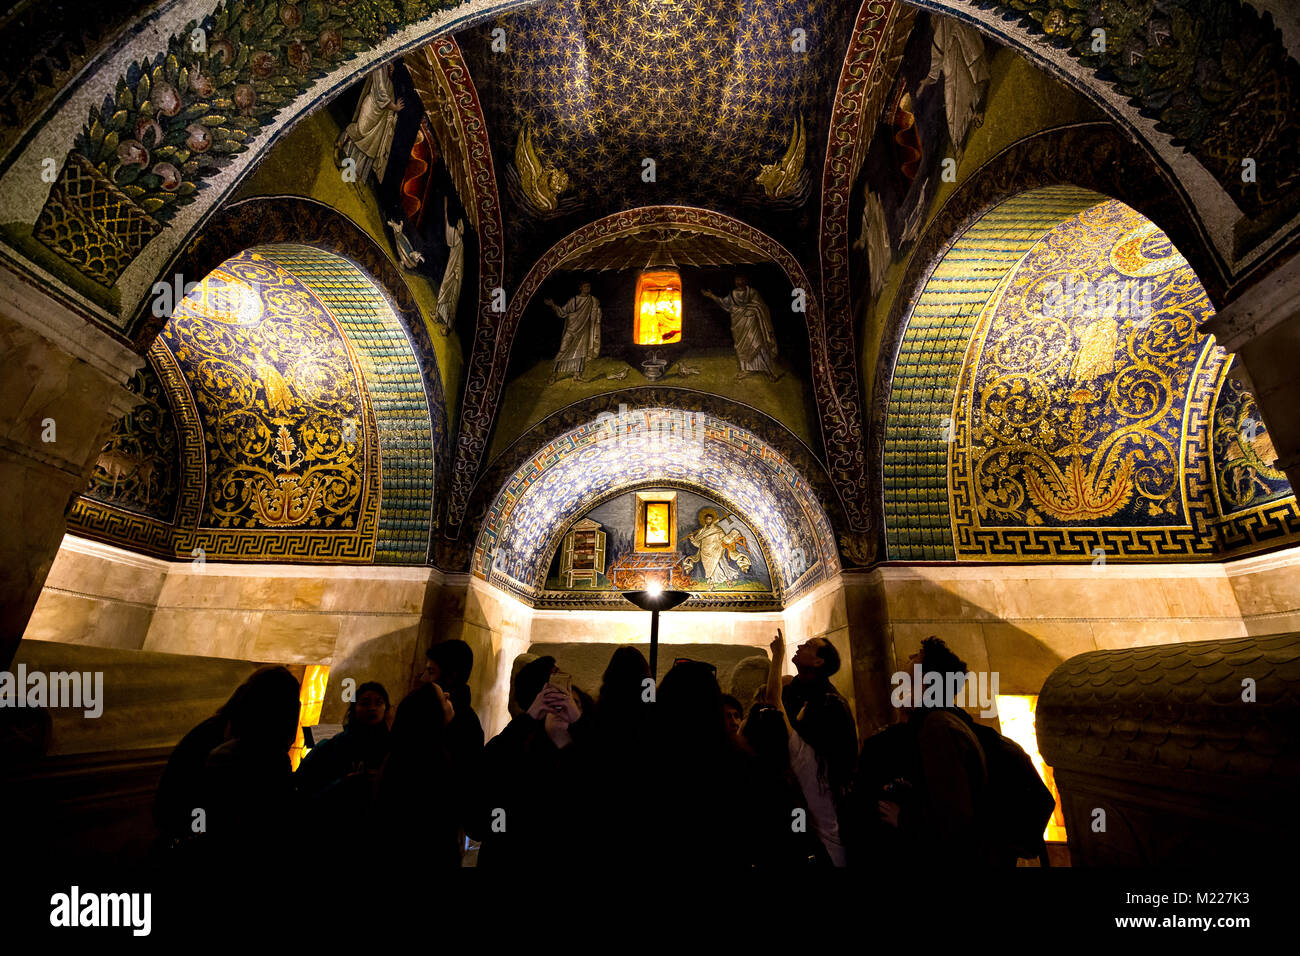 The Mausoleum of Galla Placidia with its Byzantine mosaics in Ravenna Italy Stock Photo